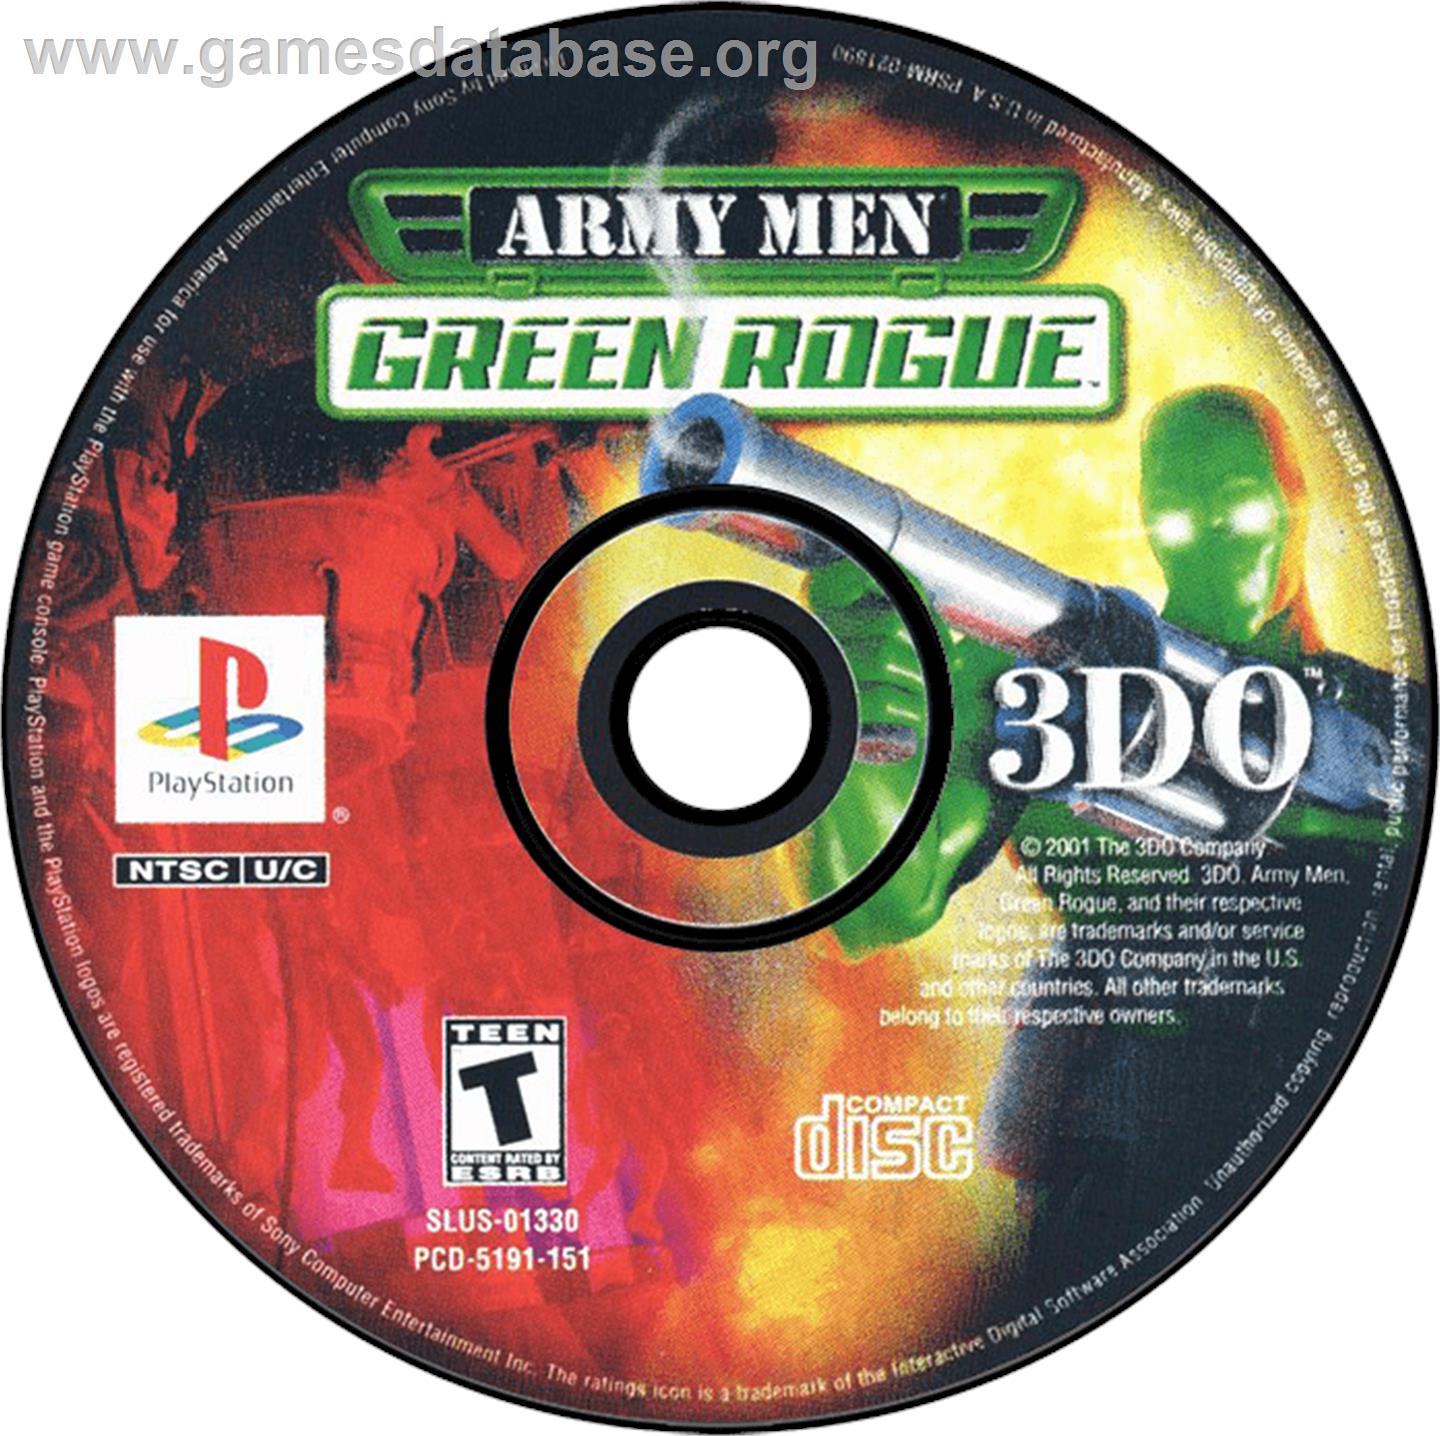 Army Men: Green Rogue - Sony Playstation - Artwork - Disc